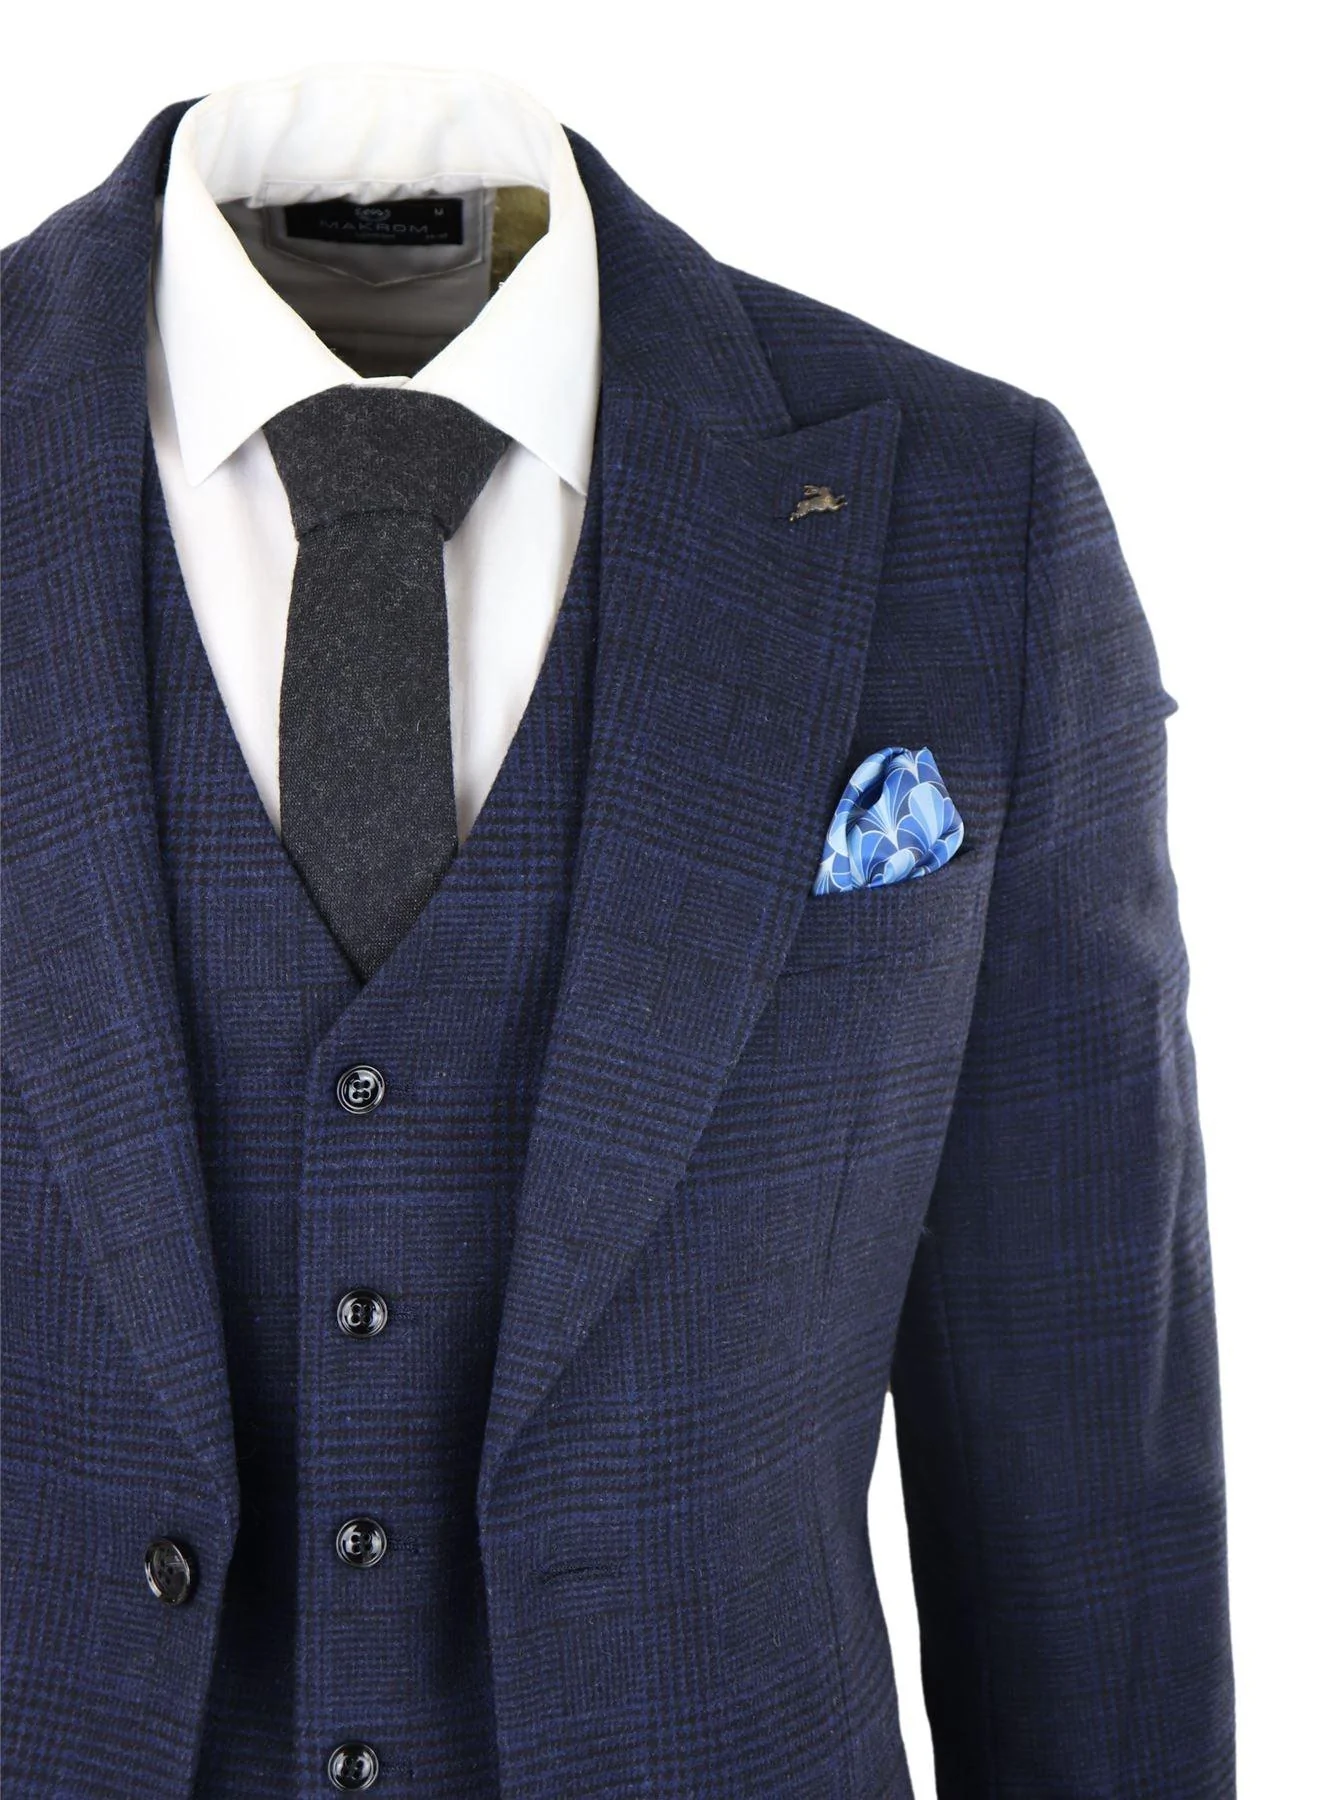 Buy Men Black Check Regular Fit Formal Two Piece Suit Online - 617678 |  Peter England